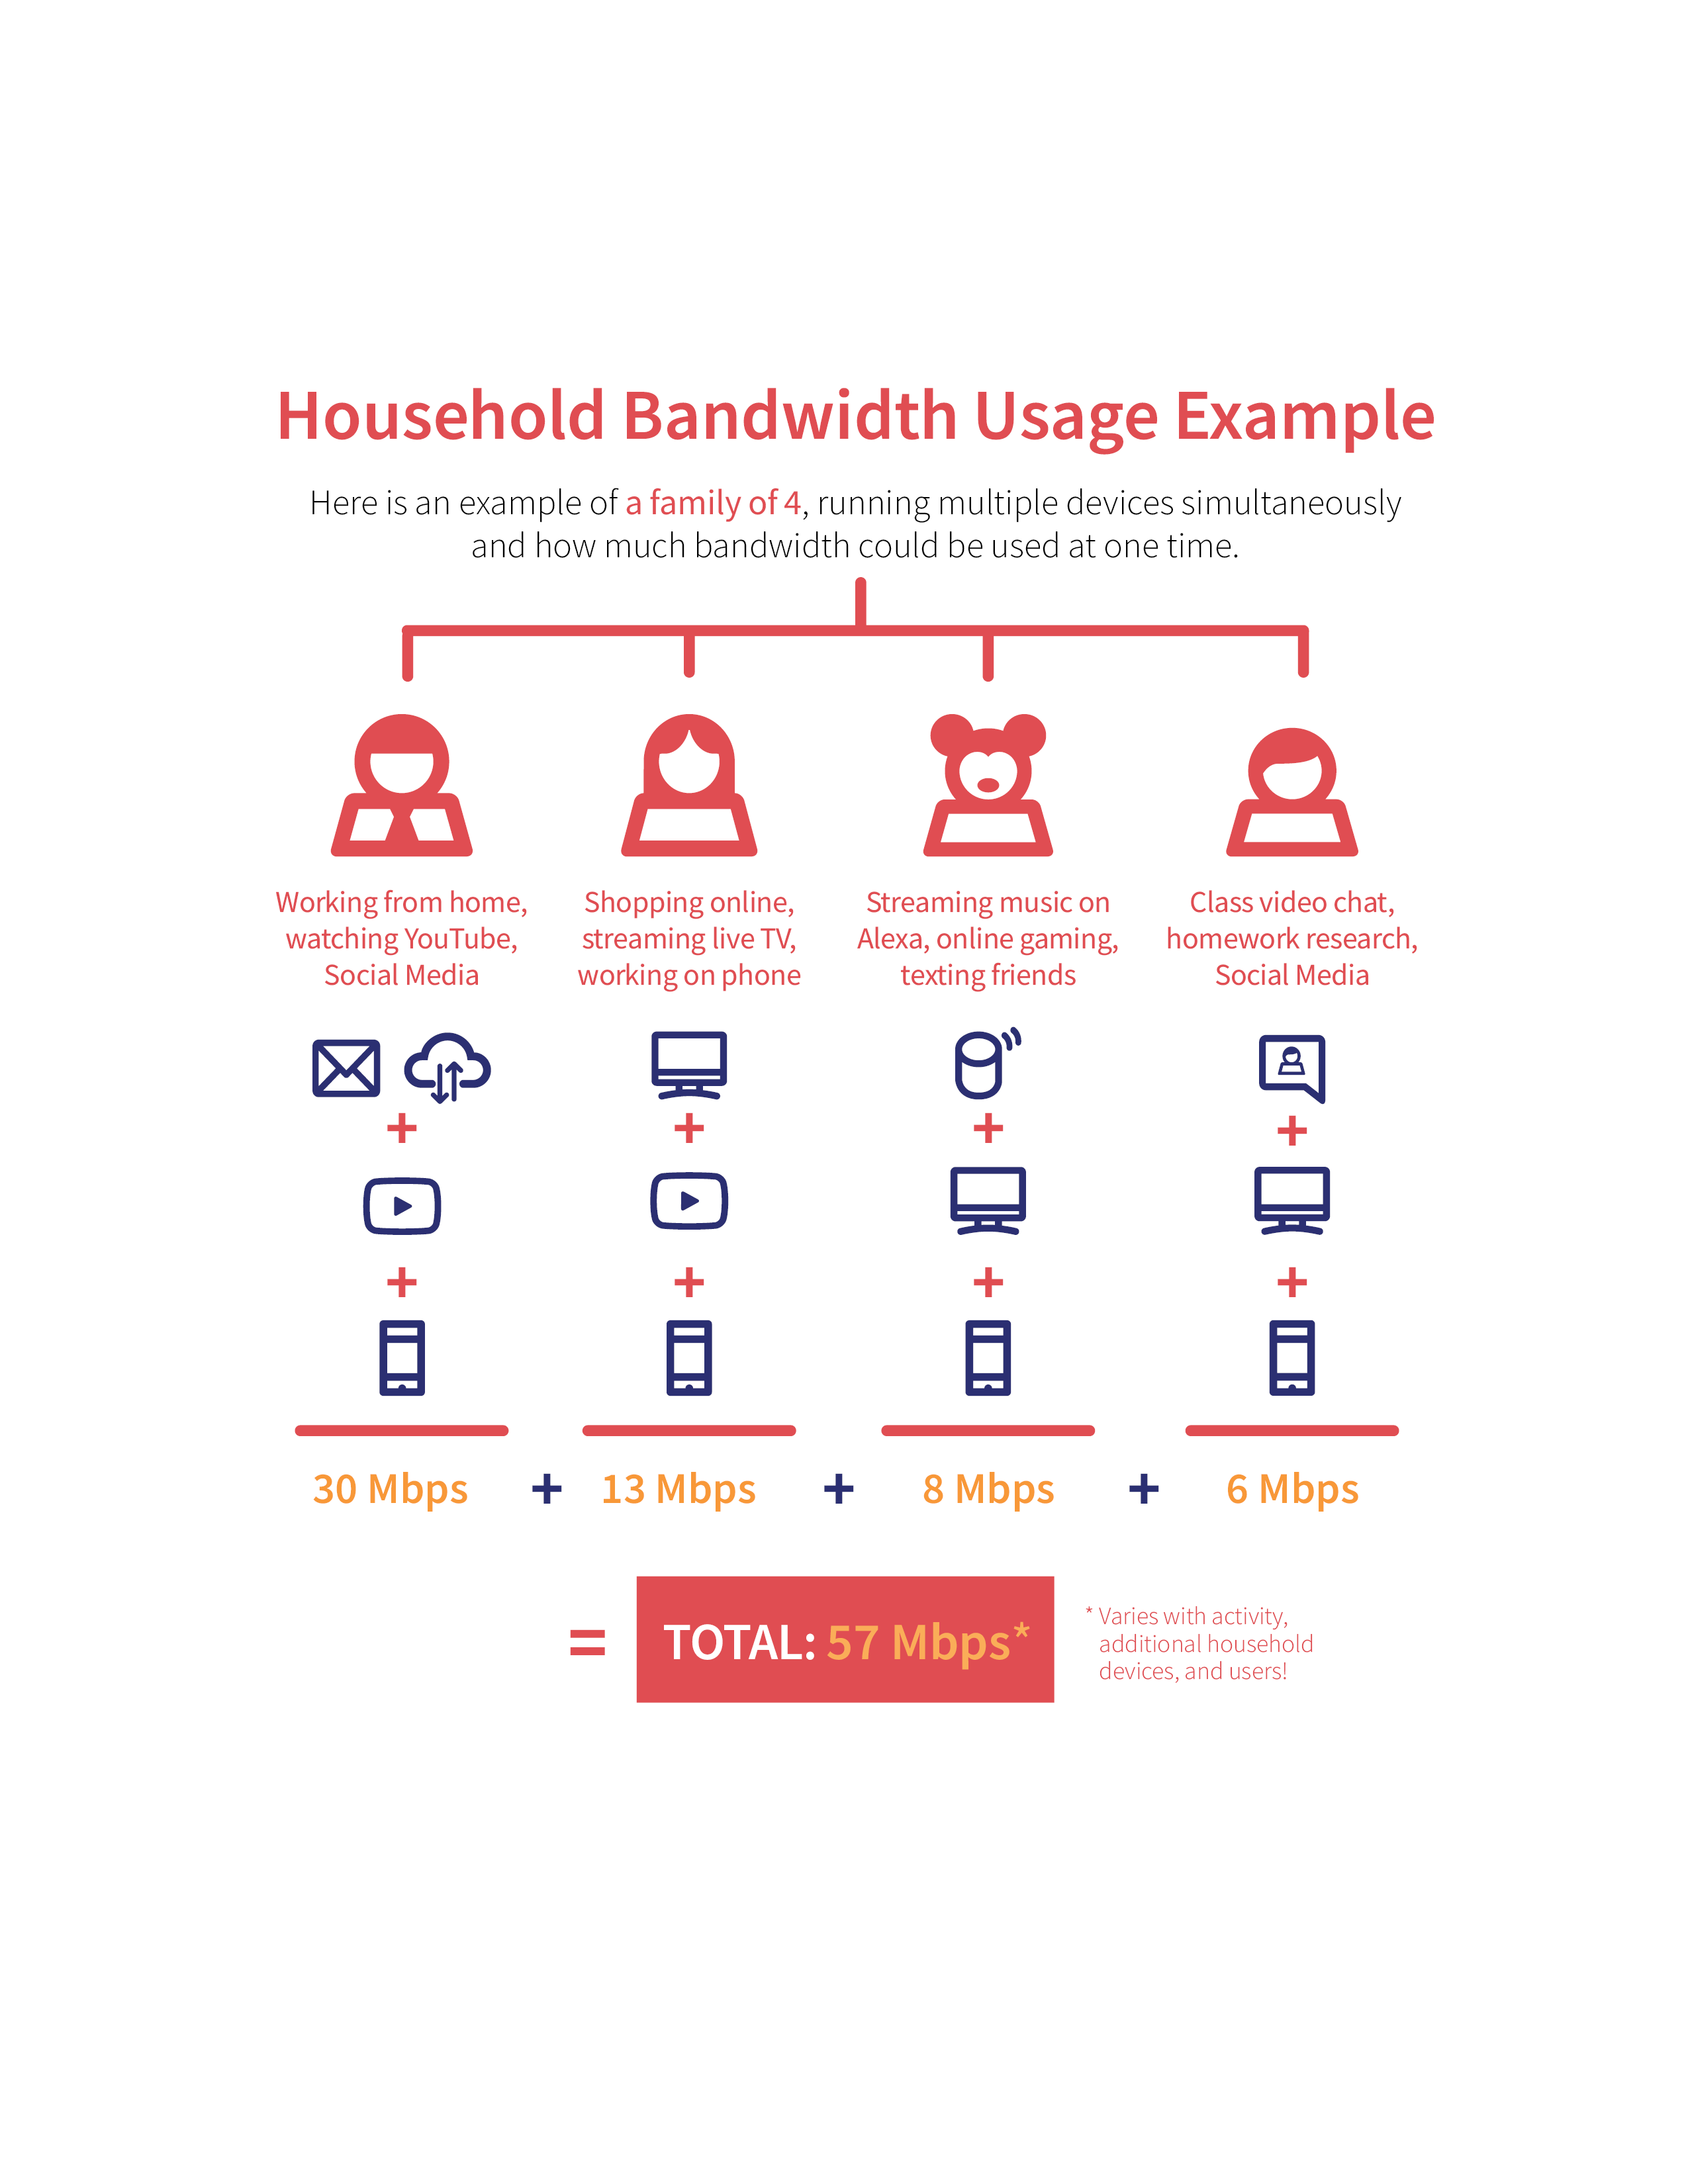 Household Bandwidth Example Infographic